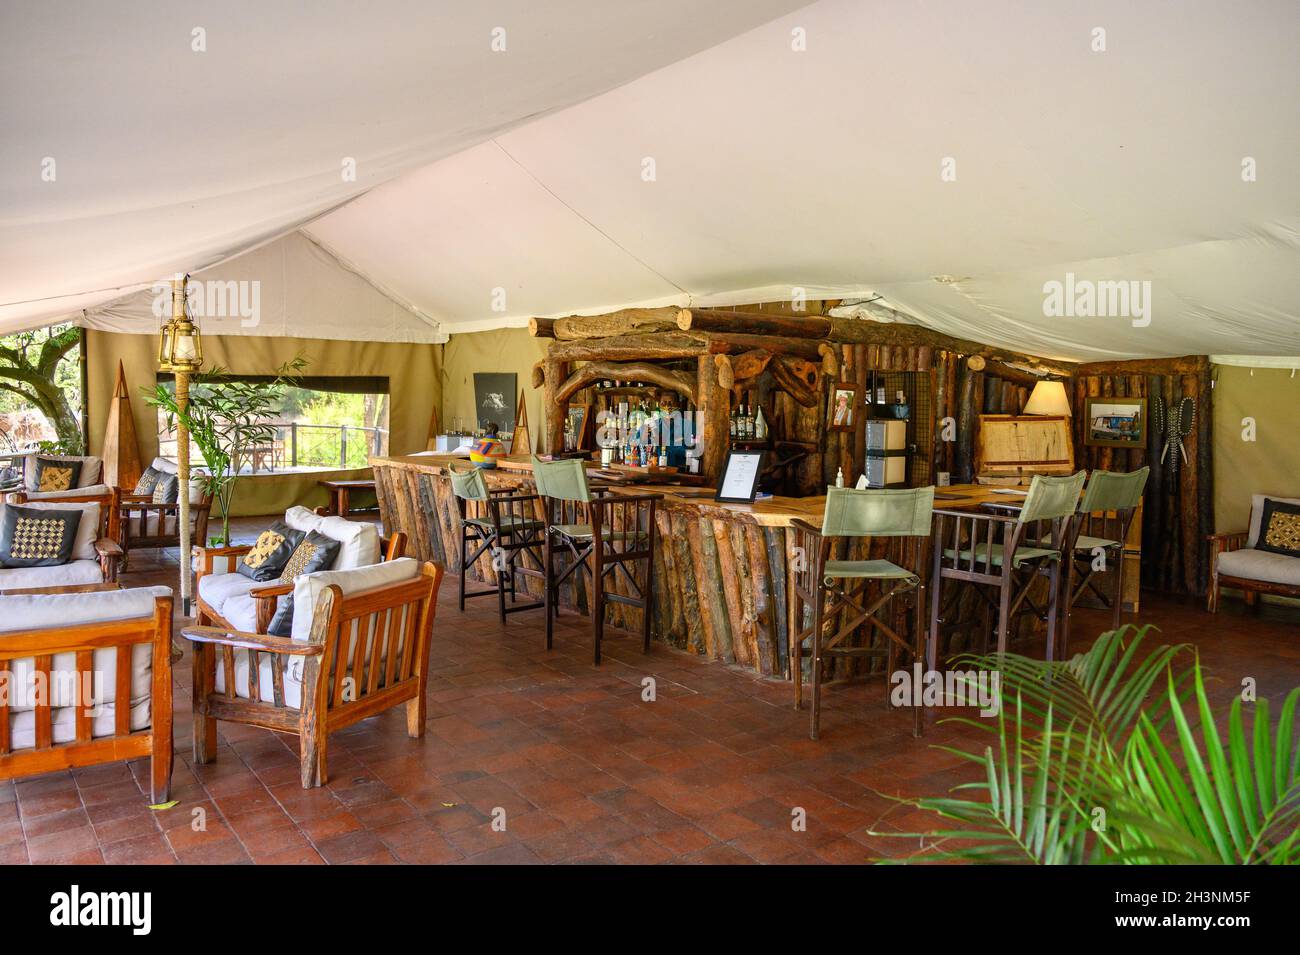 Governors' Camp tented bar area interior on a sunny afternoon, Masai Mara, Kenya Stock Photo